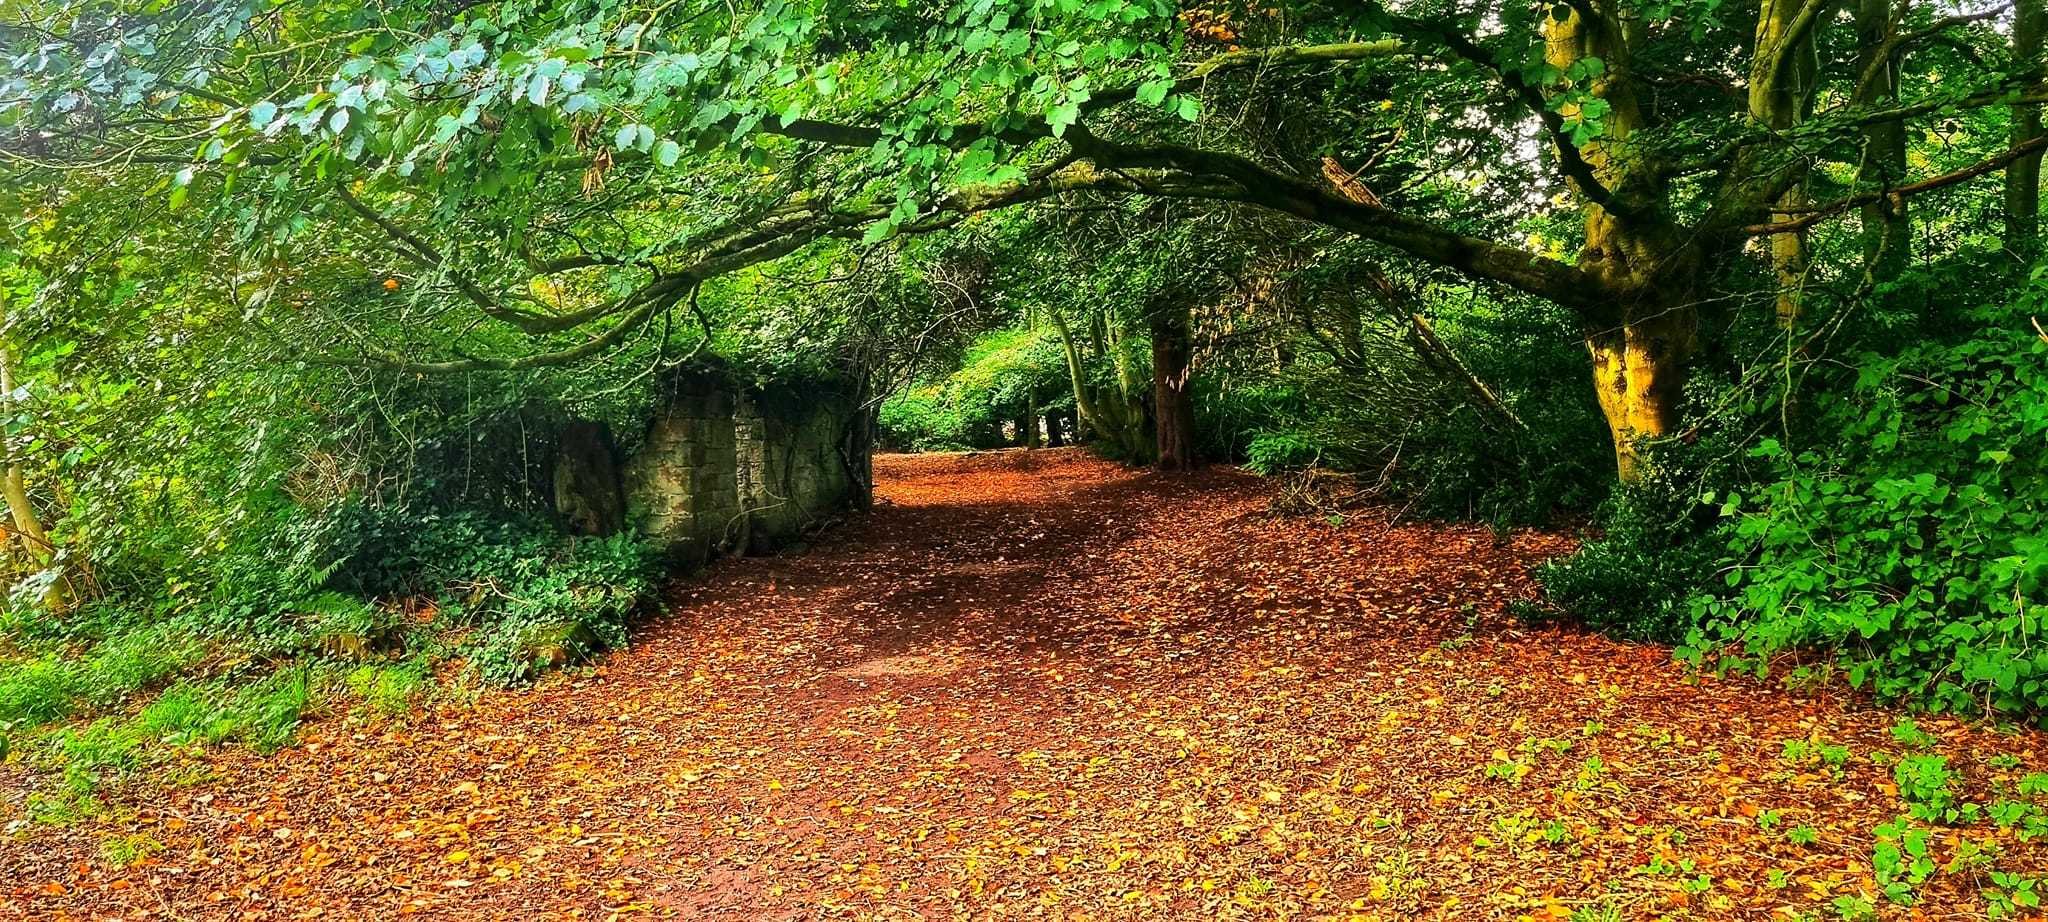 Autumn colours at Arrowe Park by Nigel Boots